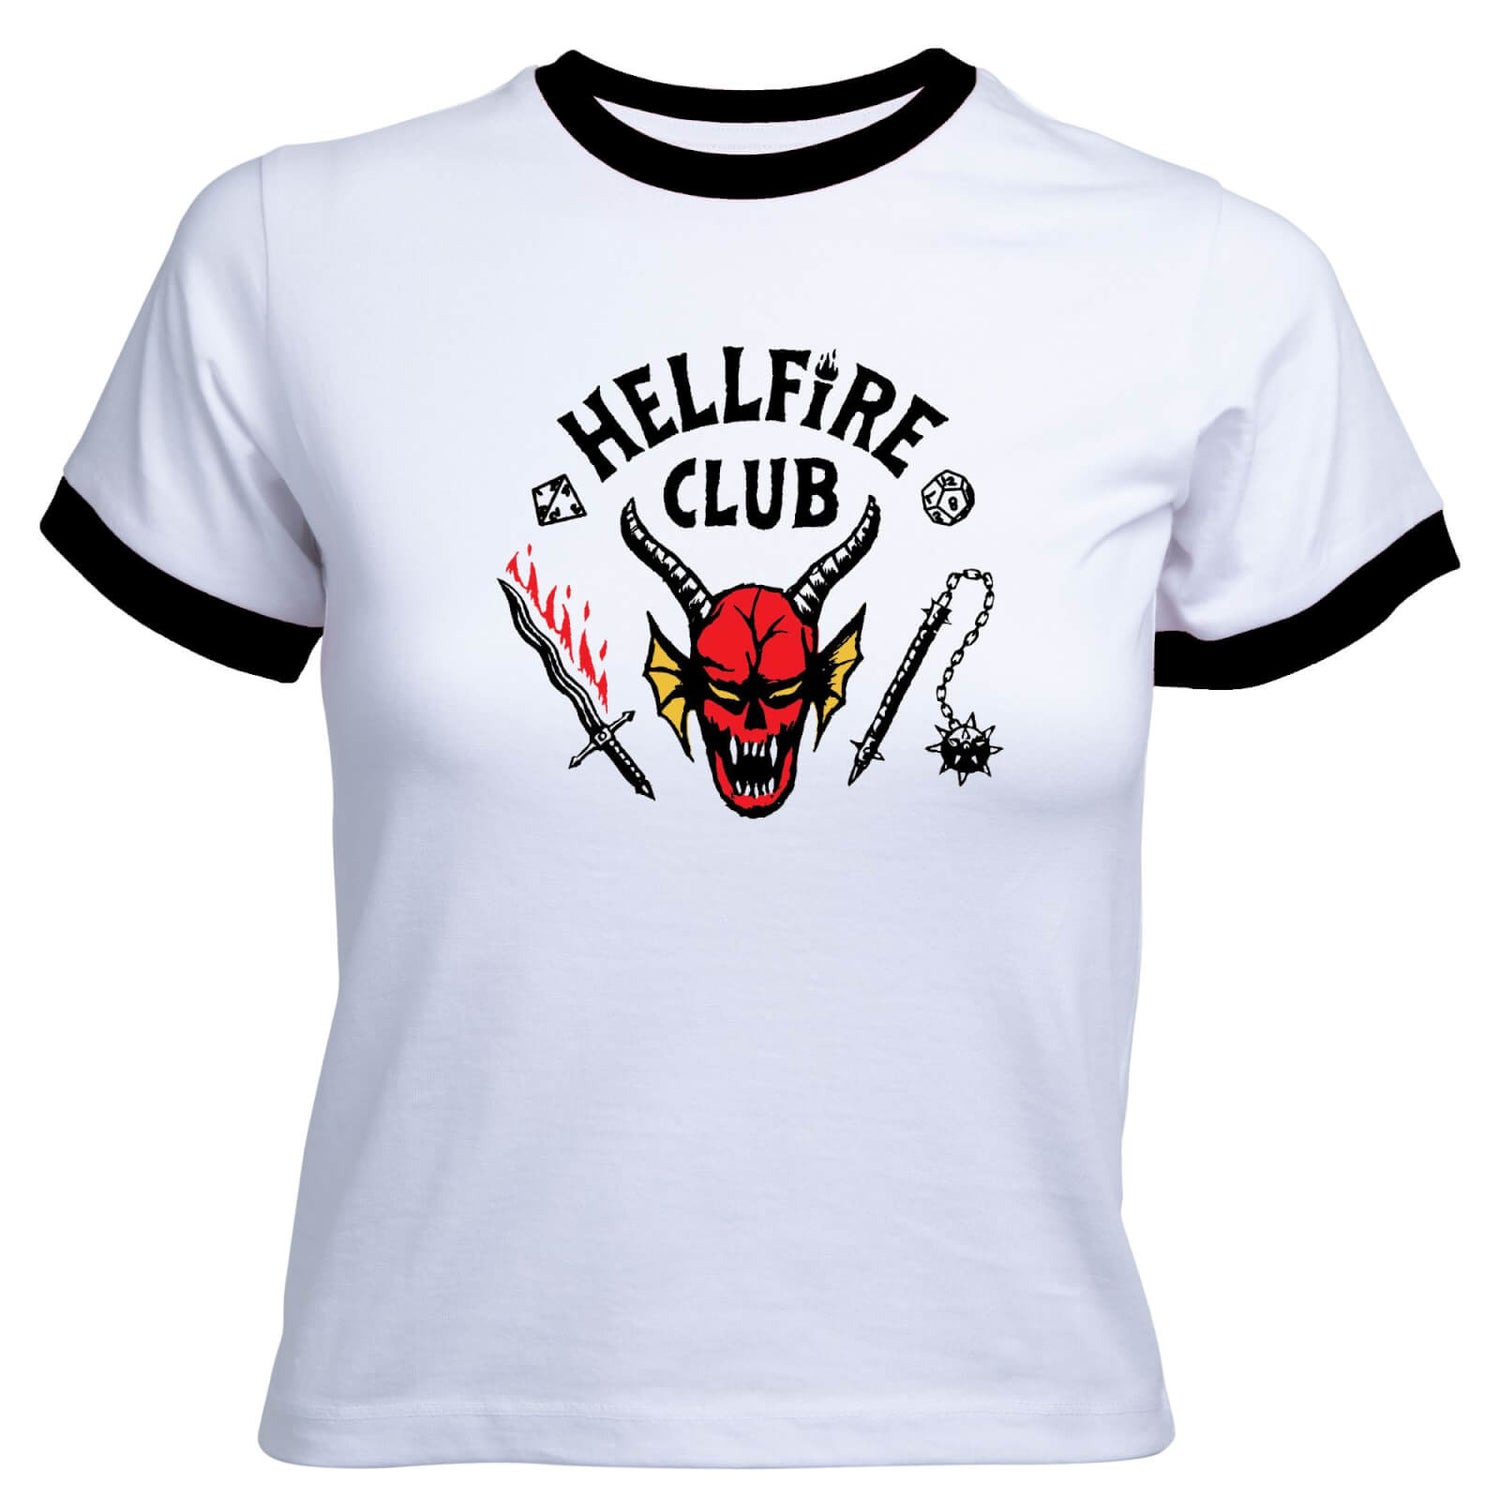 T-shirt Femme Stranger Things Hellfire Club Cropped - Noir & Blanc